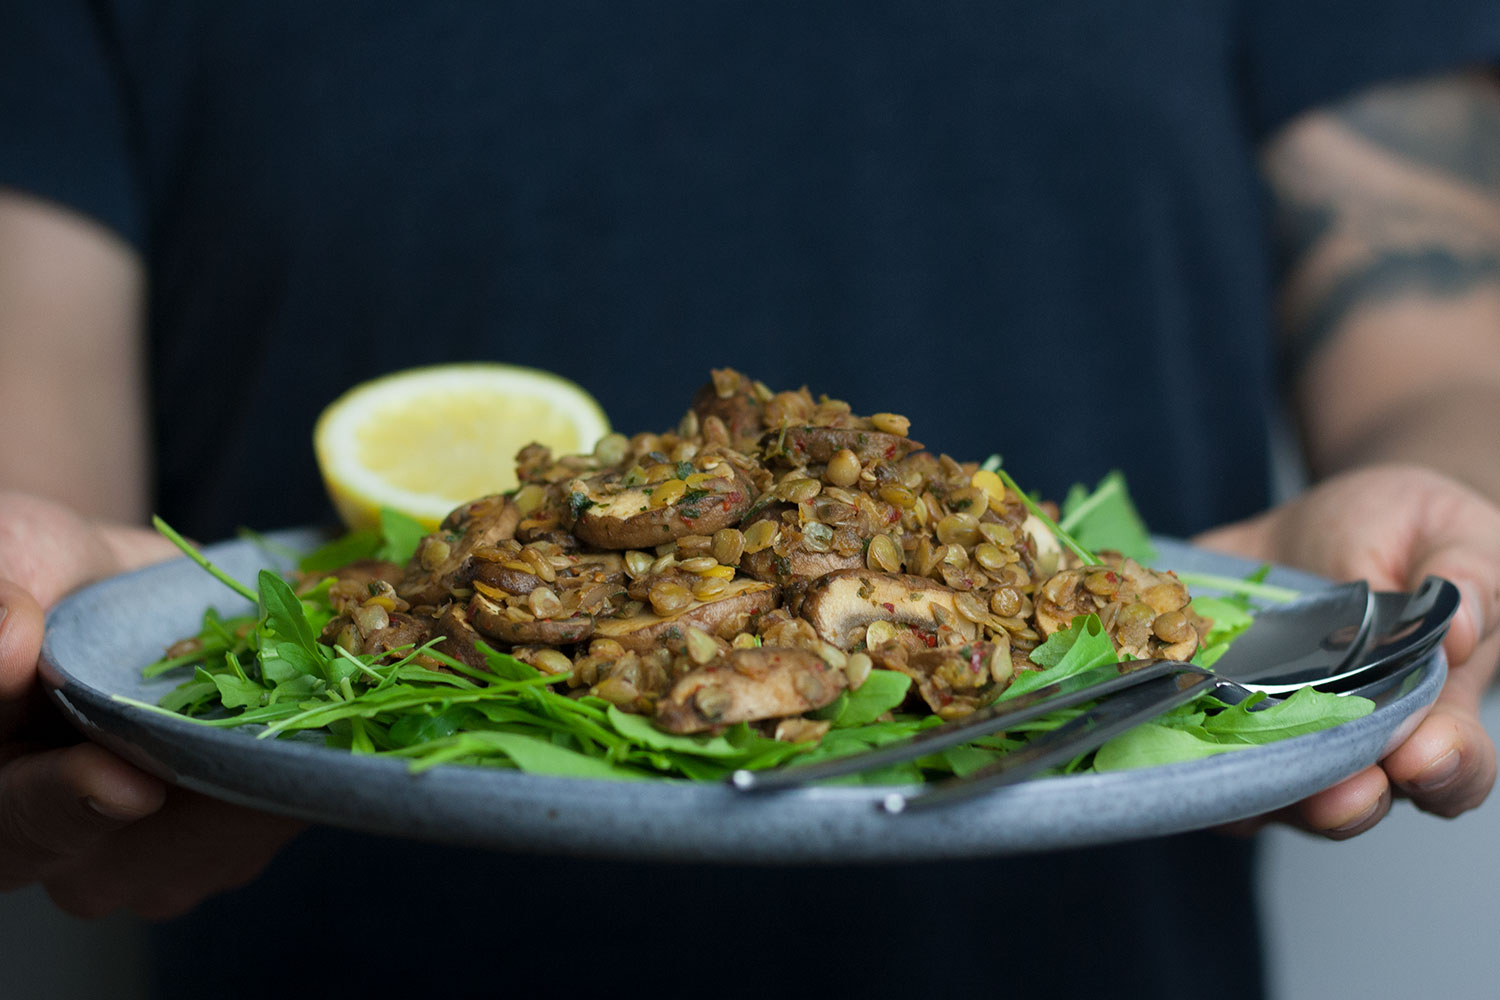 vegan lentil and mushroom salad with rocket | Linsen Pilz Salat auf Rucola